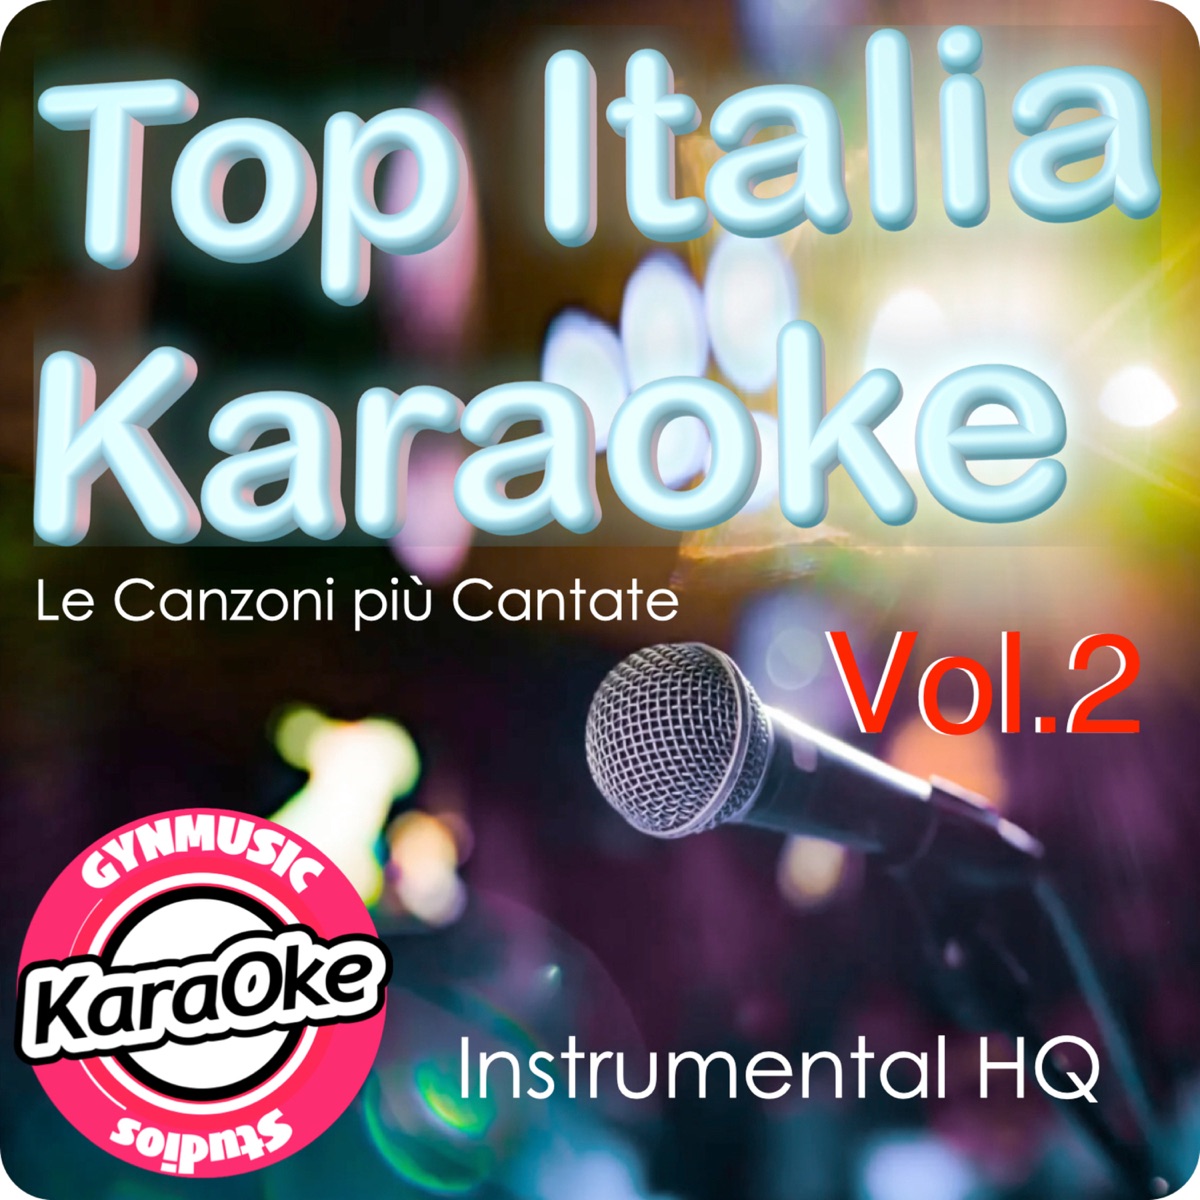 Top Italia Karaoke Vol. 2. Le Canzoni più Cantate (Karaoke Version) - Album  by Gynmusic Studios - Apple Music